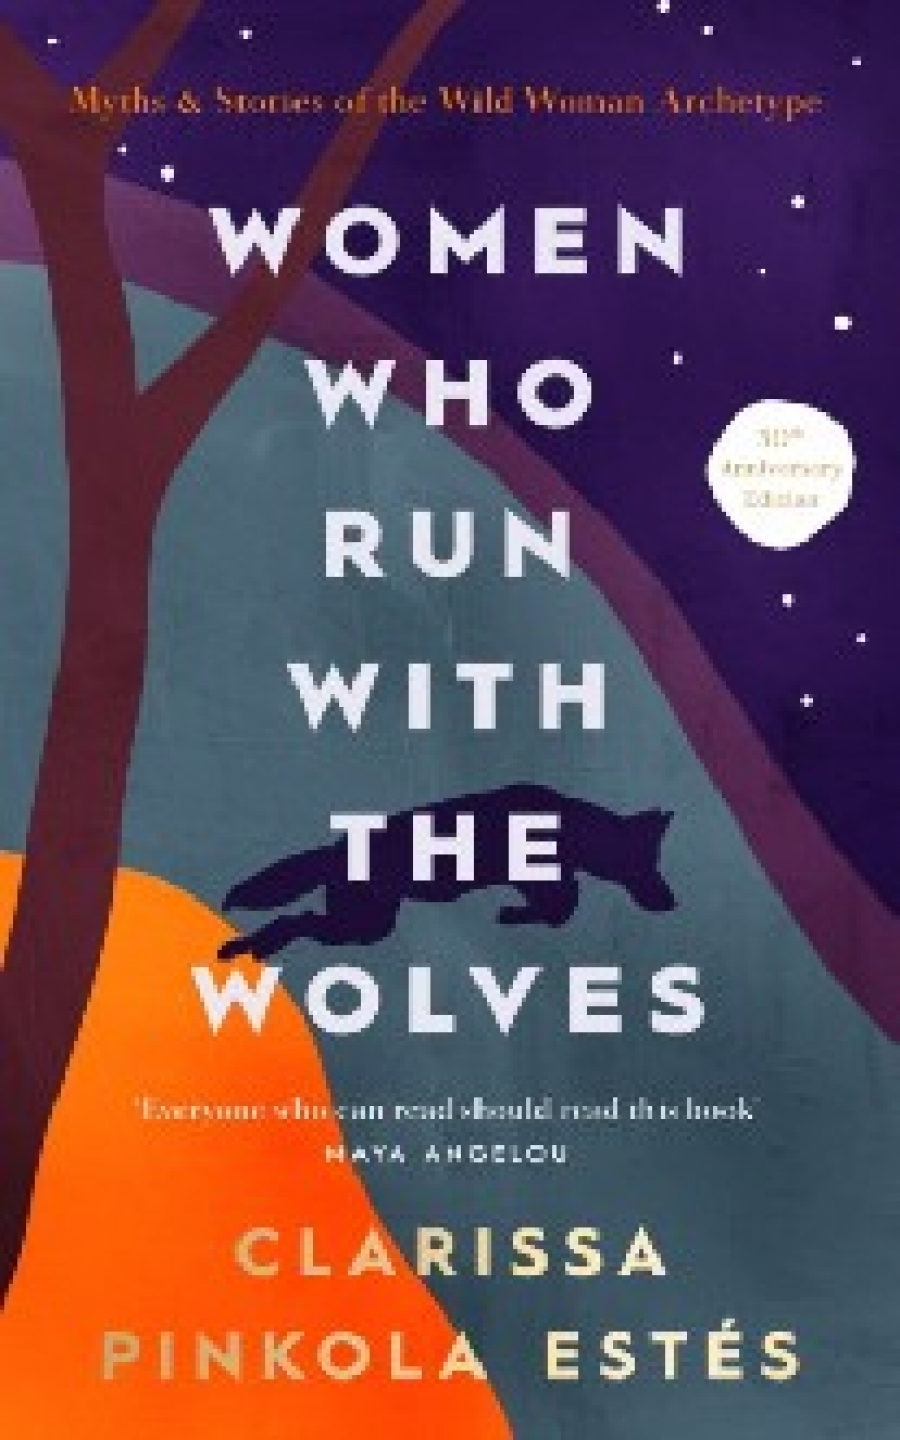 Estes, Clarissa Pinkola Women Who Run With The Wolves 